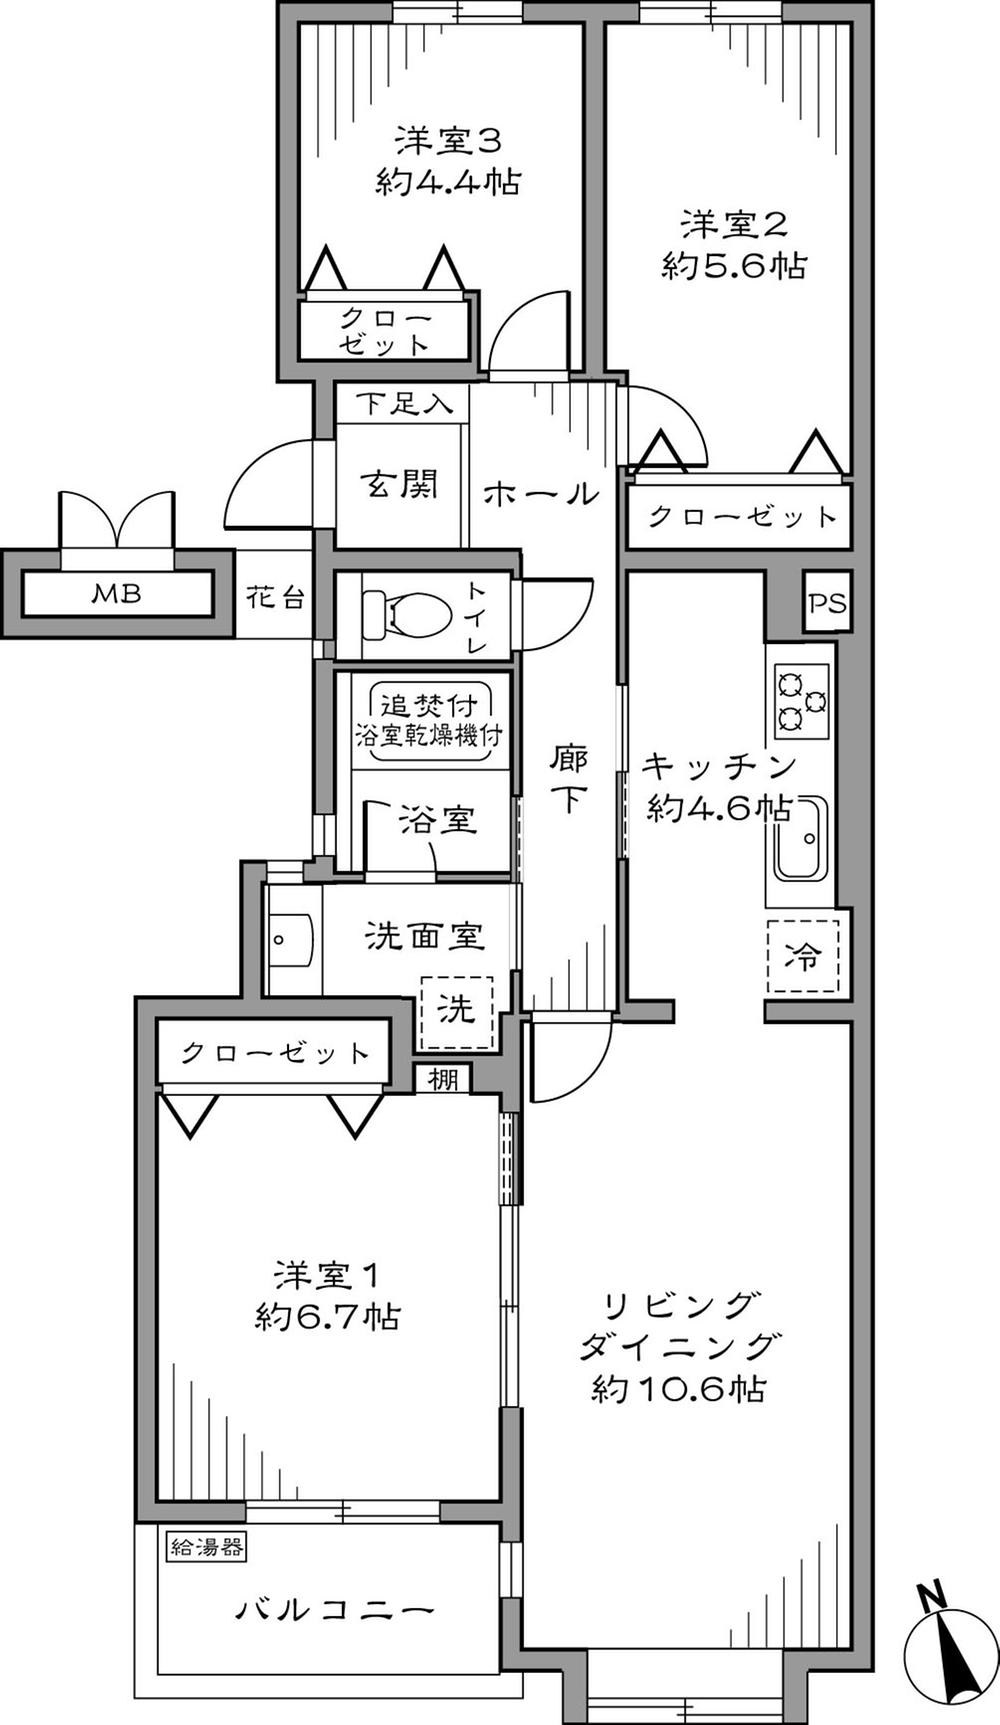 Floor plan. 3LDK, Price 25,800,000 yen, Occupied area 71.92 sq m , Balcony area 4.5 sq m